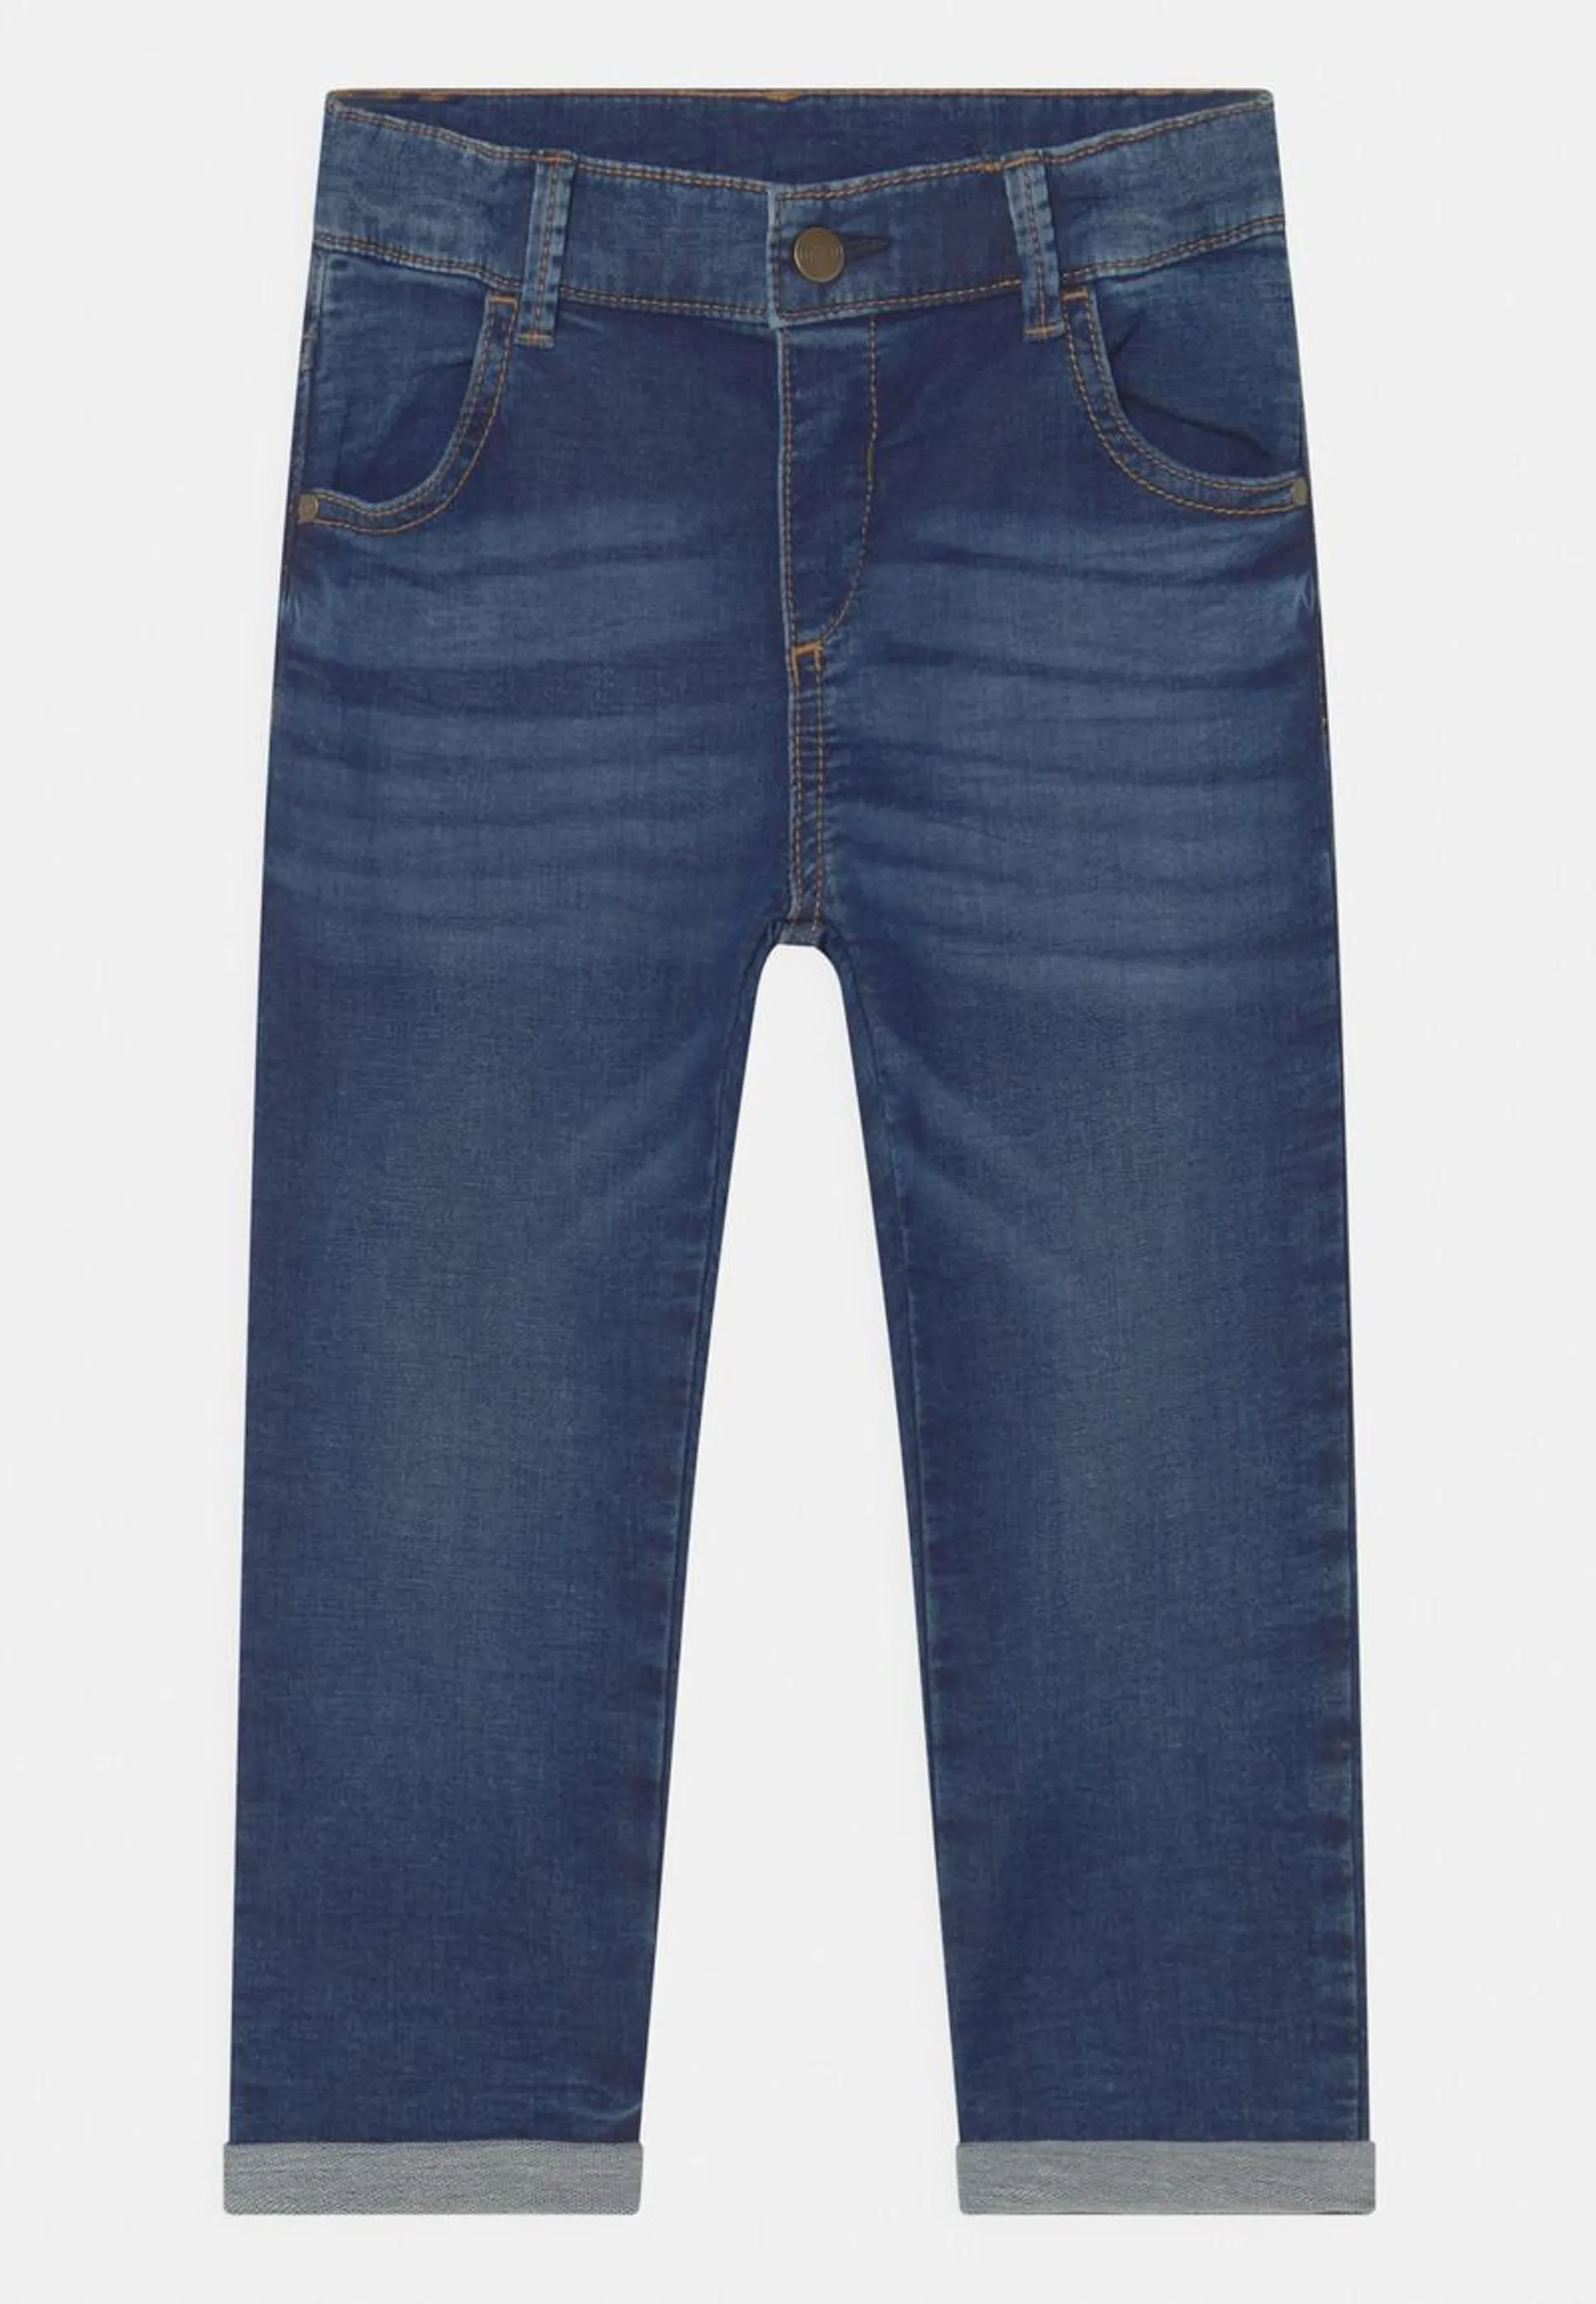 TROUSERS UNISEX - Slim fit jeans